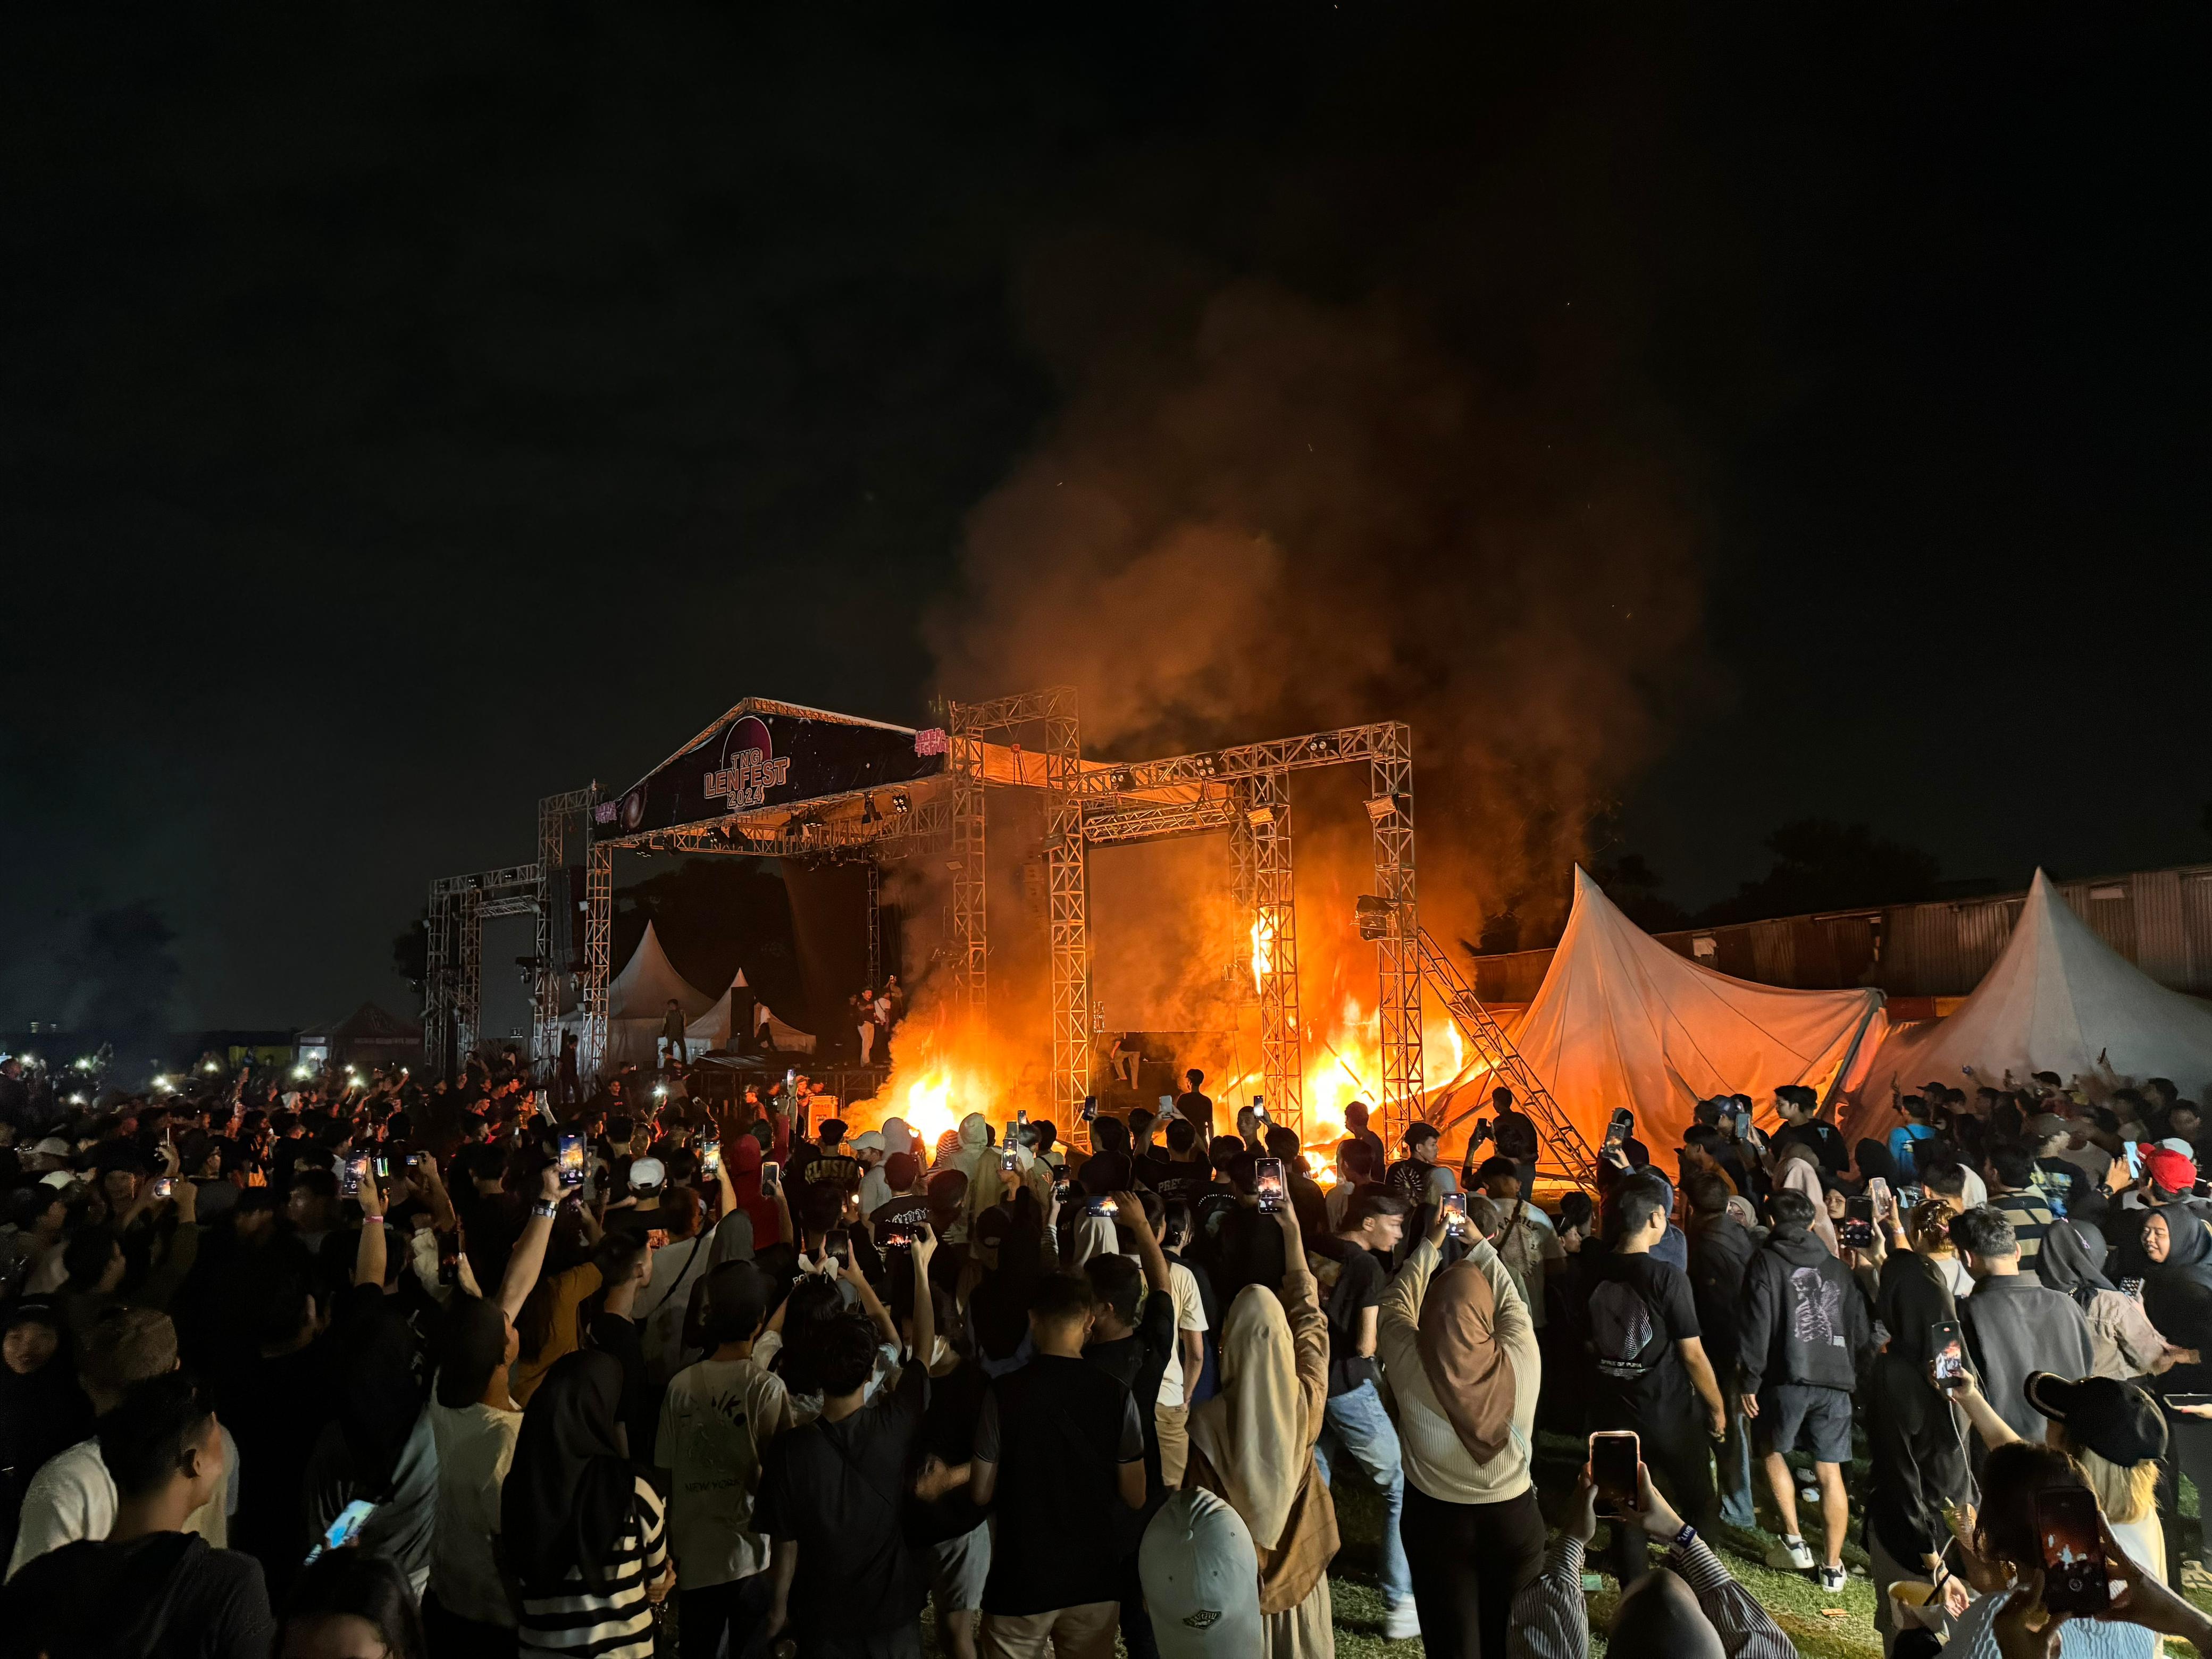 RUNNING NEWS: Panitia Konser Lentera Festival Diburu Polisi Setelah Panggung Dibakar Penonton